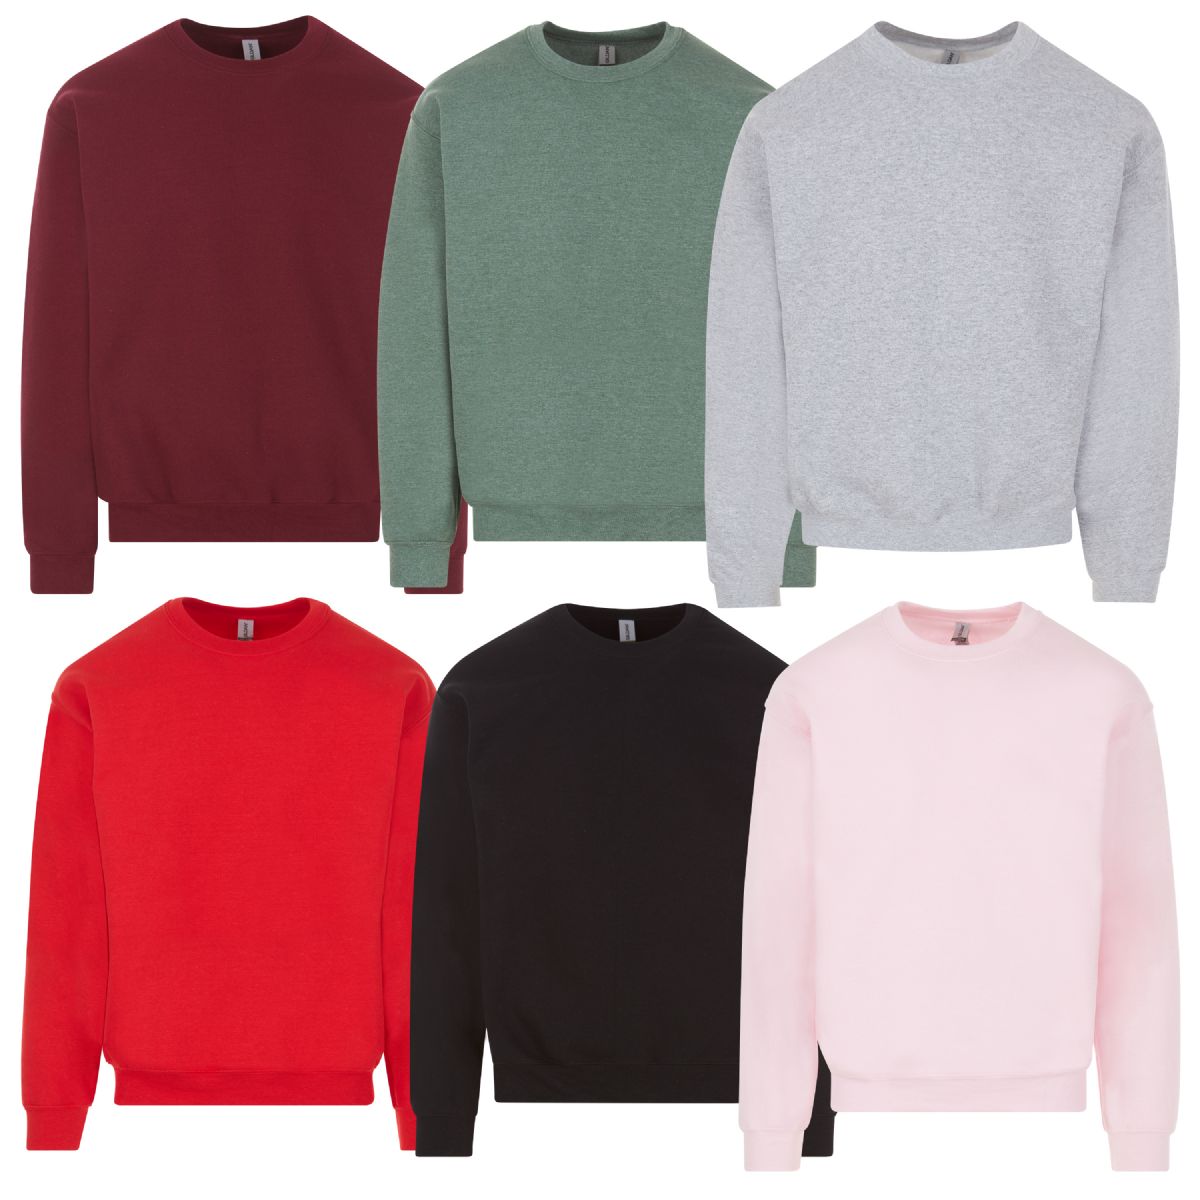 12 Pieces of Gildan Unisex Assorted Colors Fleece Sweat Shirts Size 2xlarge